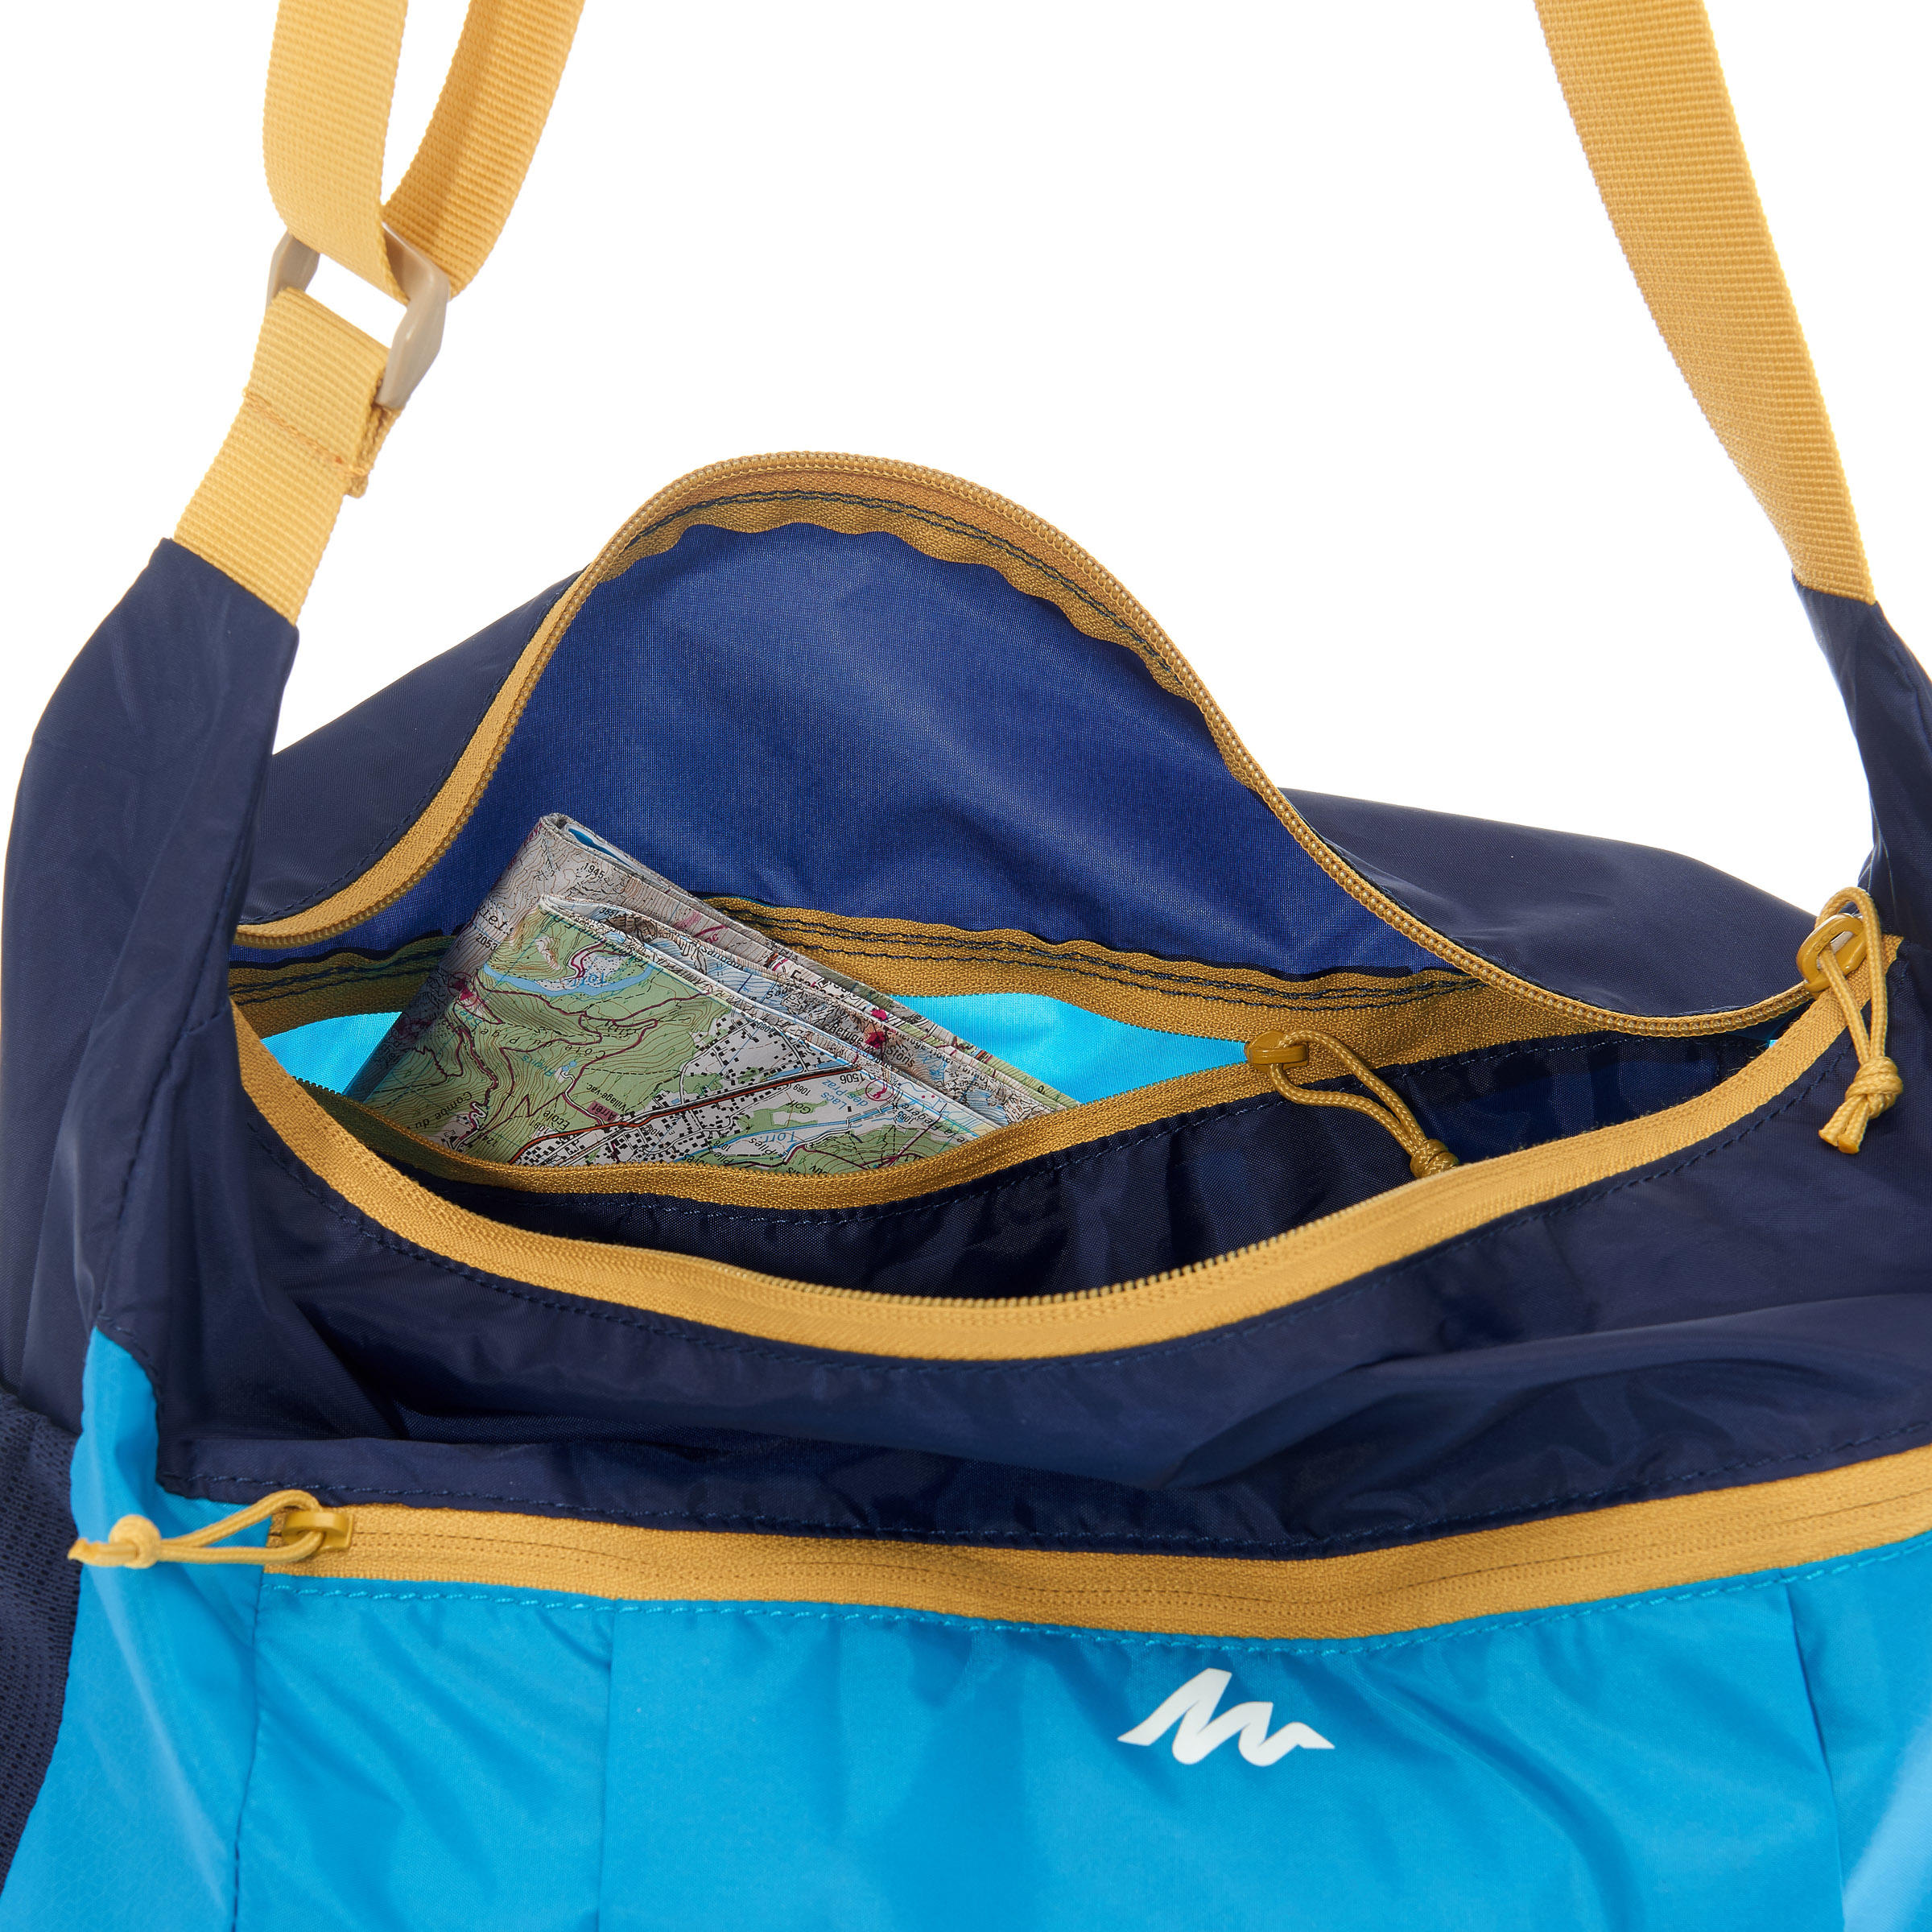 Travel Ultra-compact Messenger Bag - Blue 3/18